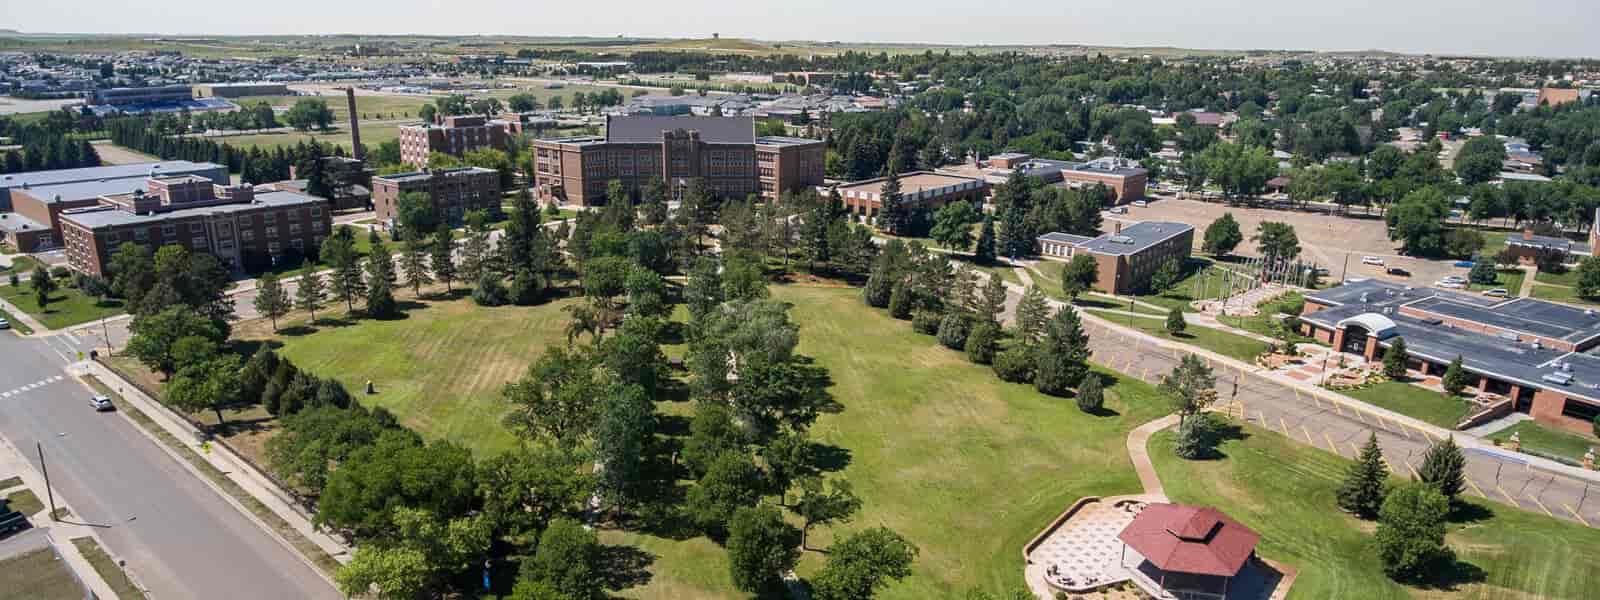 Dickinson State University